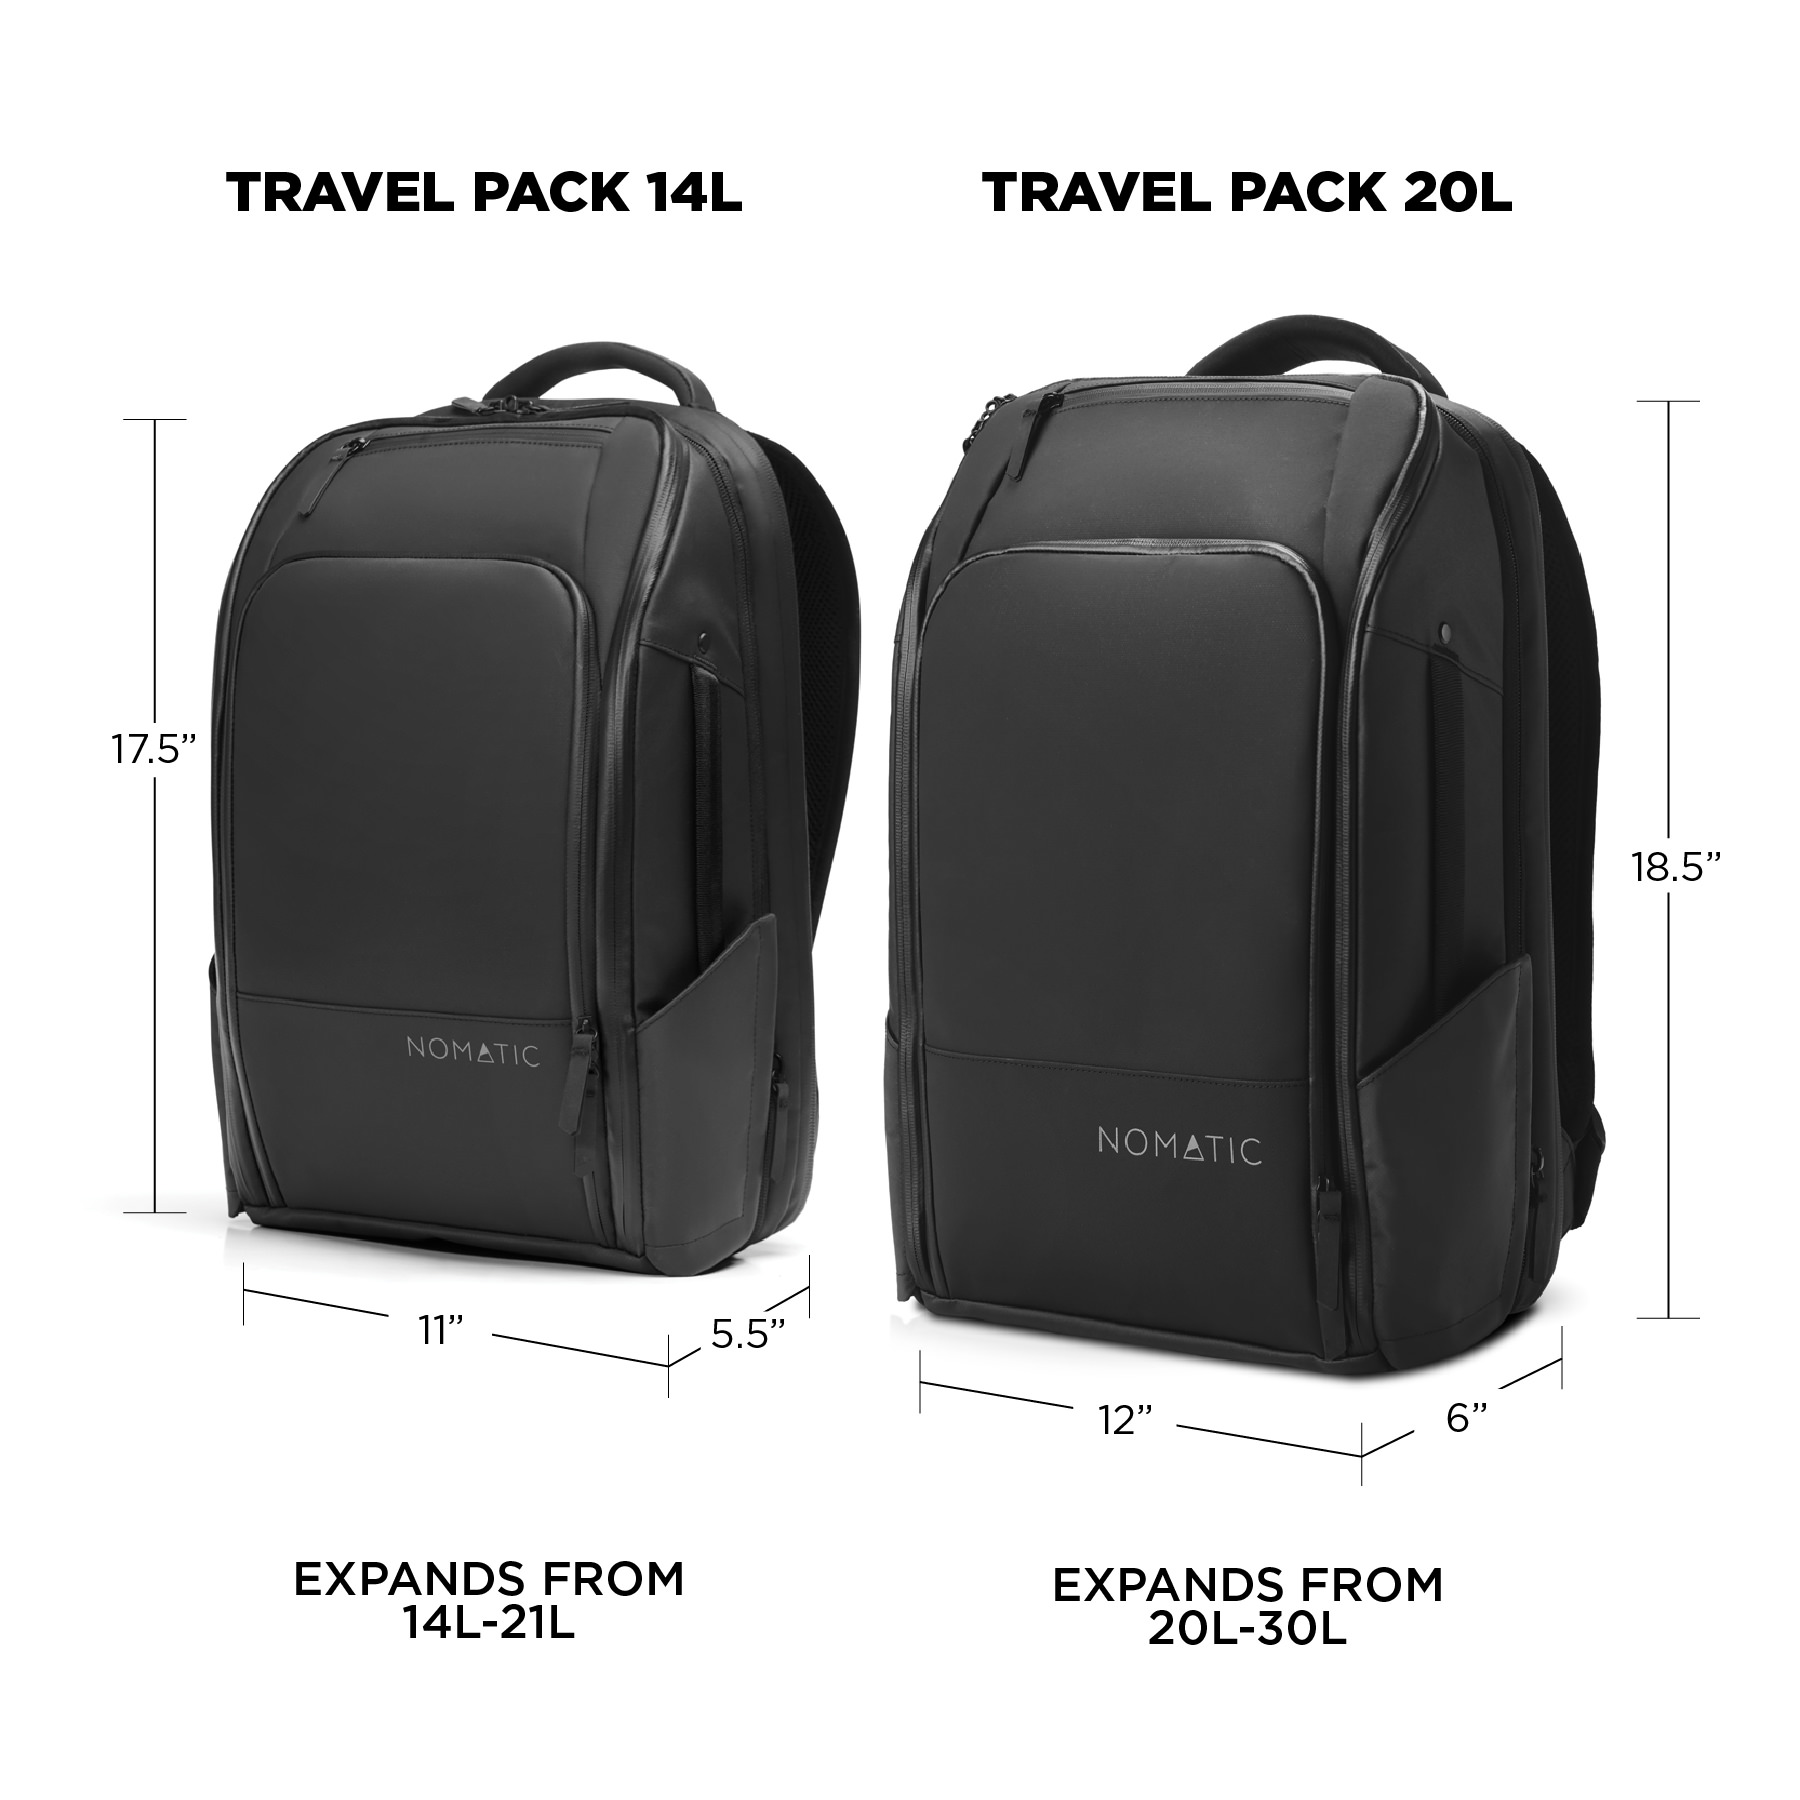 14L Travel Pack